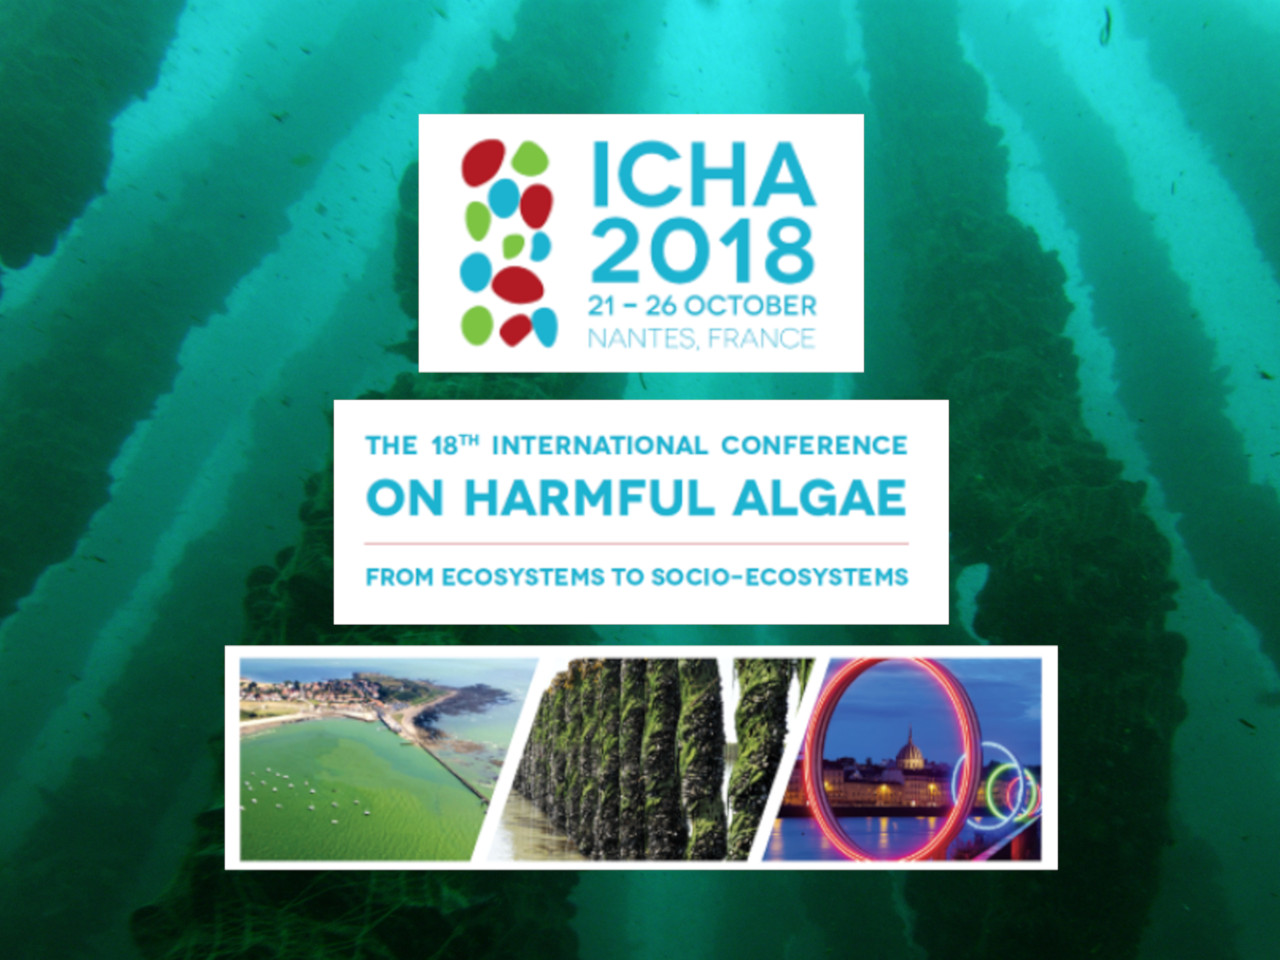 ICHA - THE 18TH INTERNATIONAL CONFERENCE ON HARMFUL ALGAE